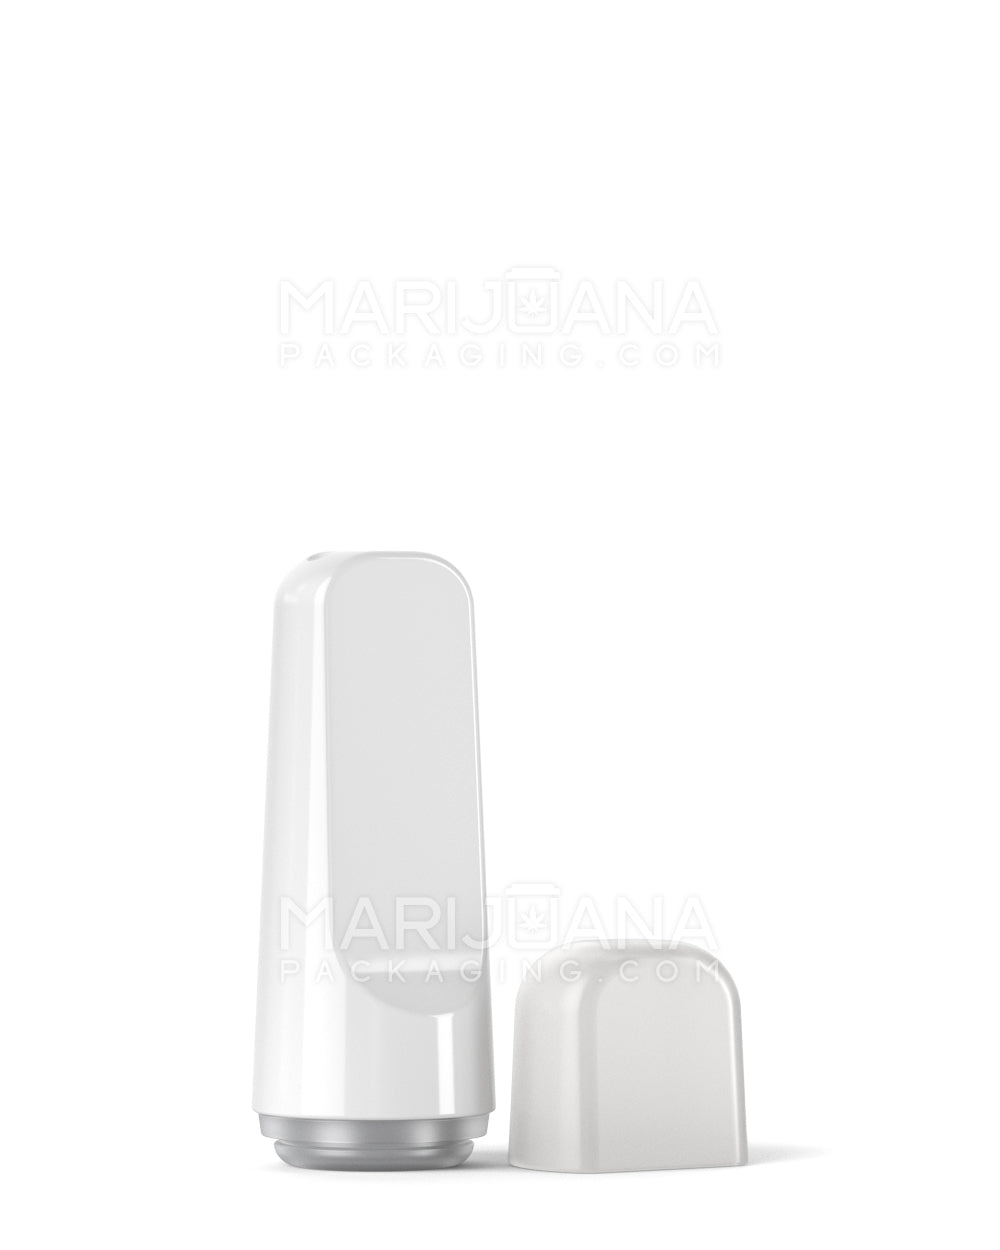 RAE | Flat Vape Mouthpiece for Arbor Press Plastic Cartridges | White Plastic - Arbor Press - 400 Count